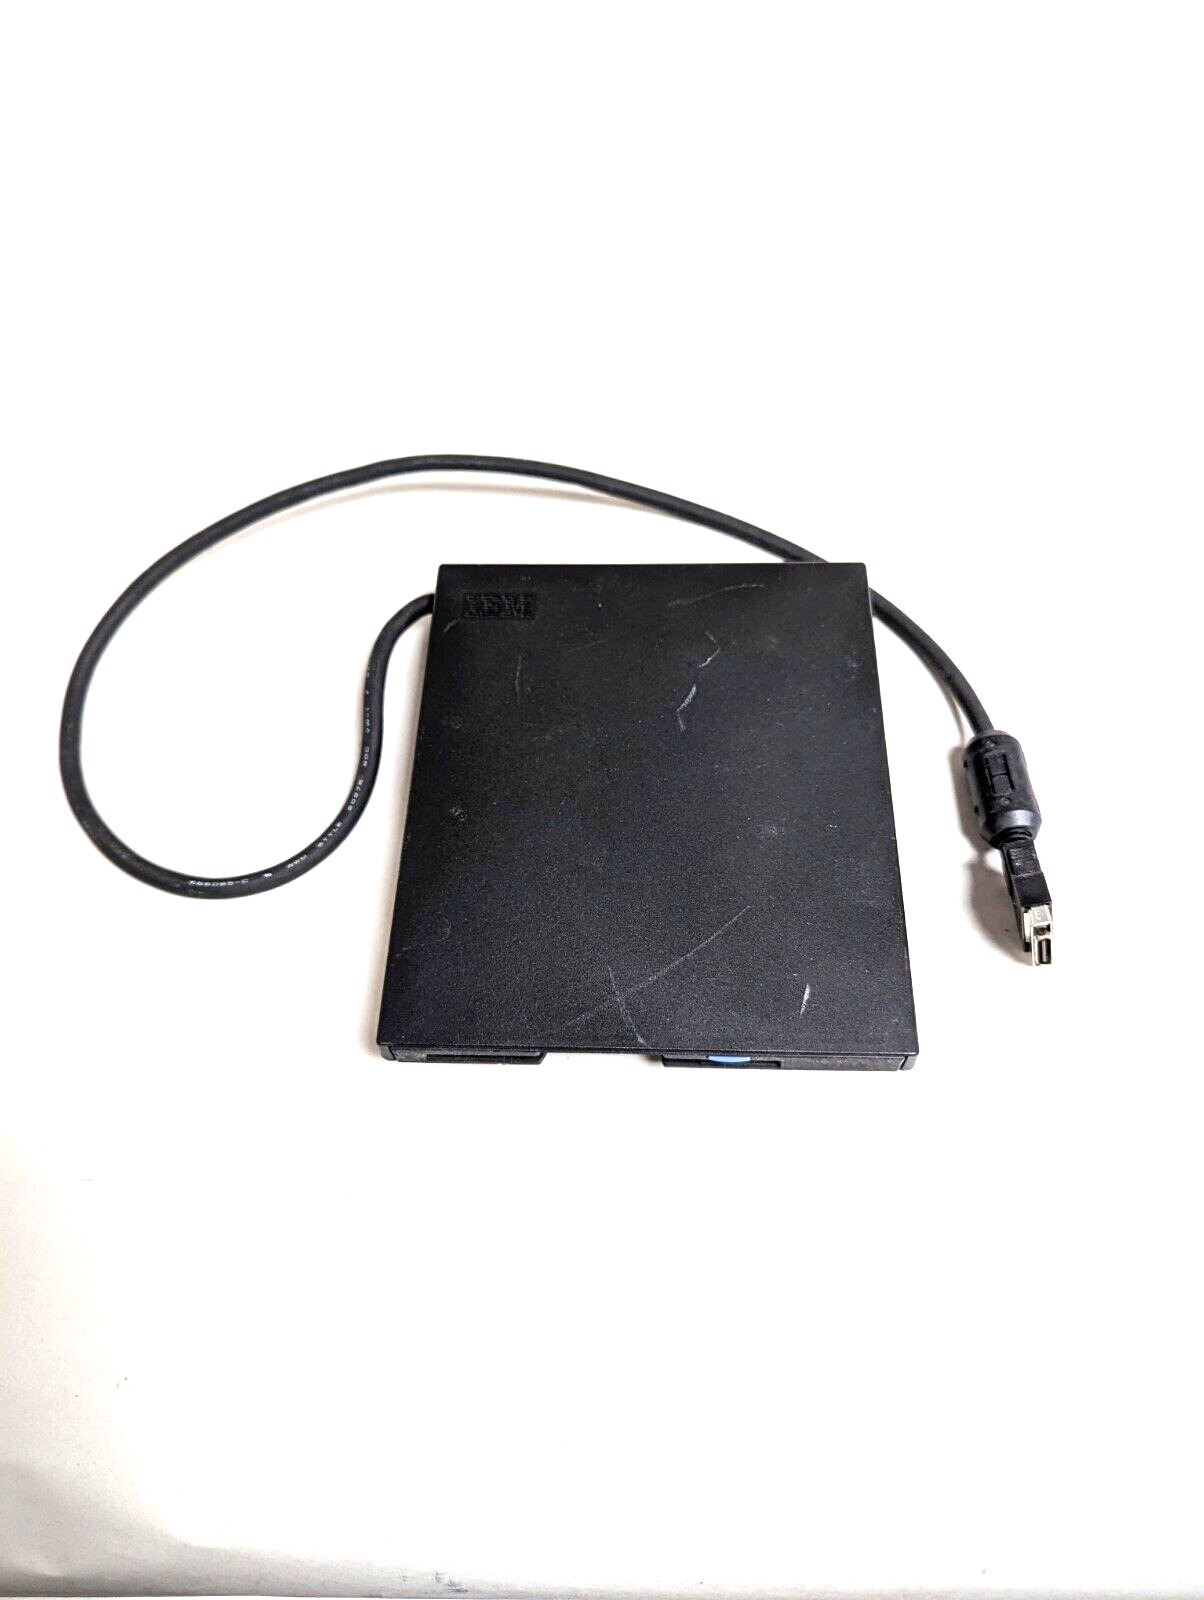 Vintage IBM Thinkpad External Floppy drive with removable TEAC 1.44 Rare